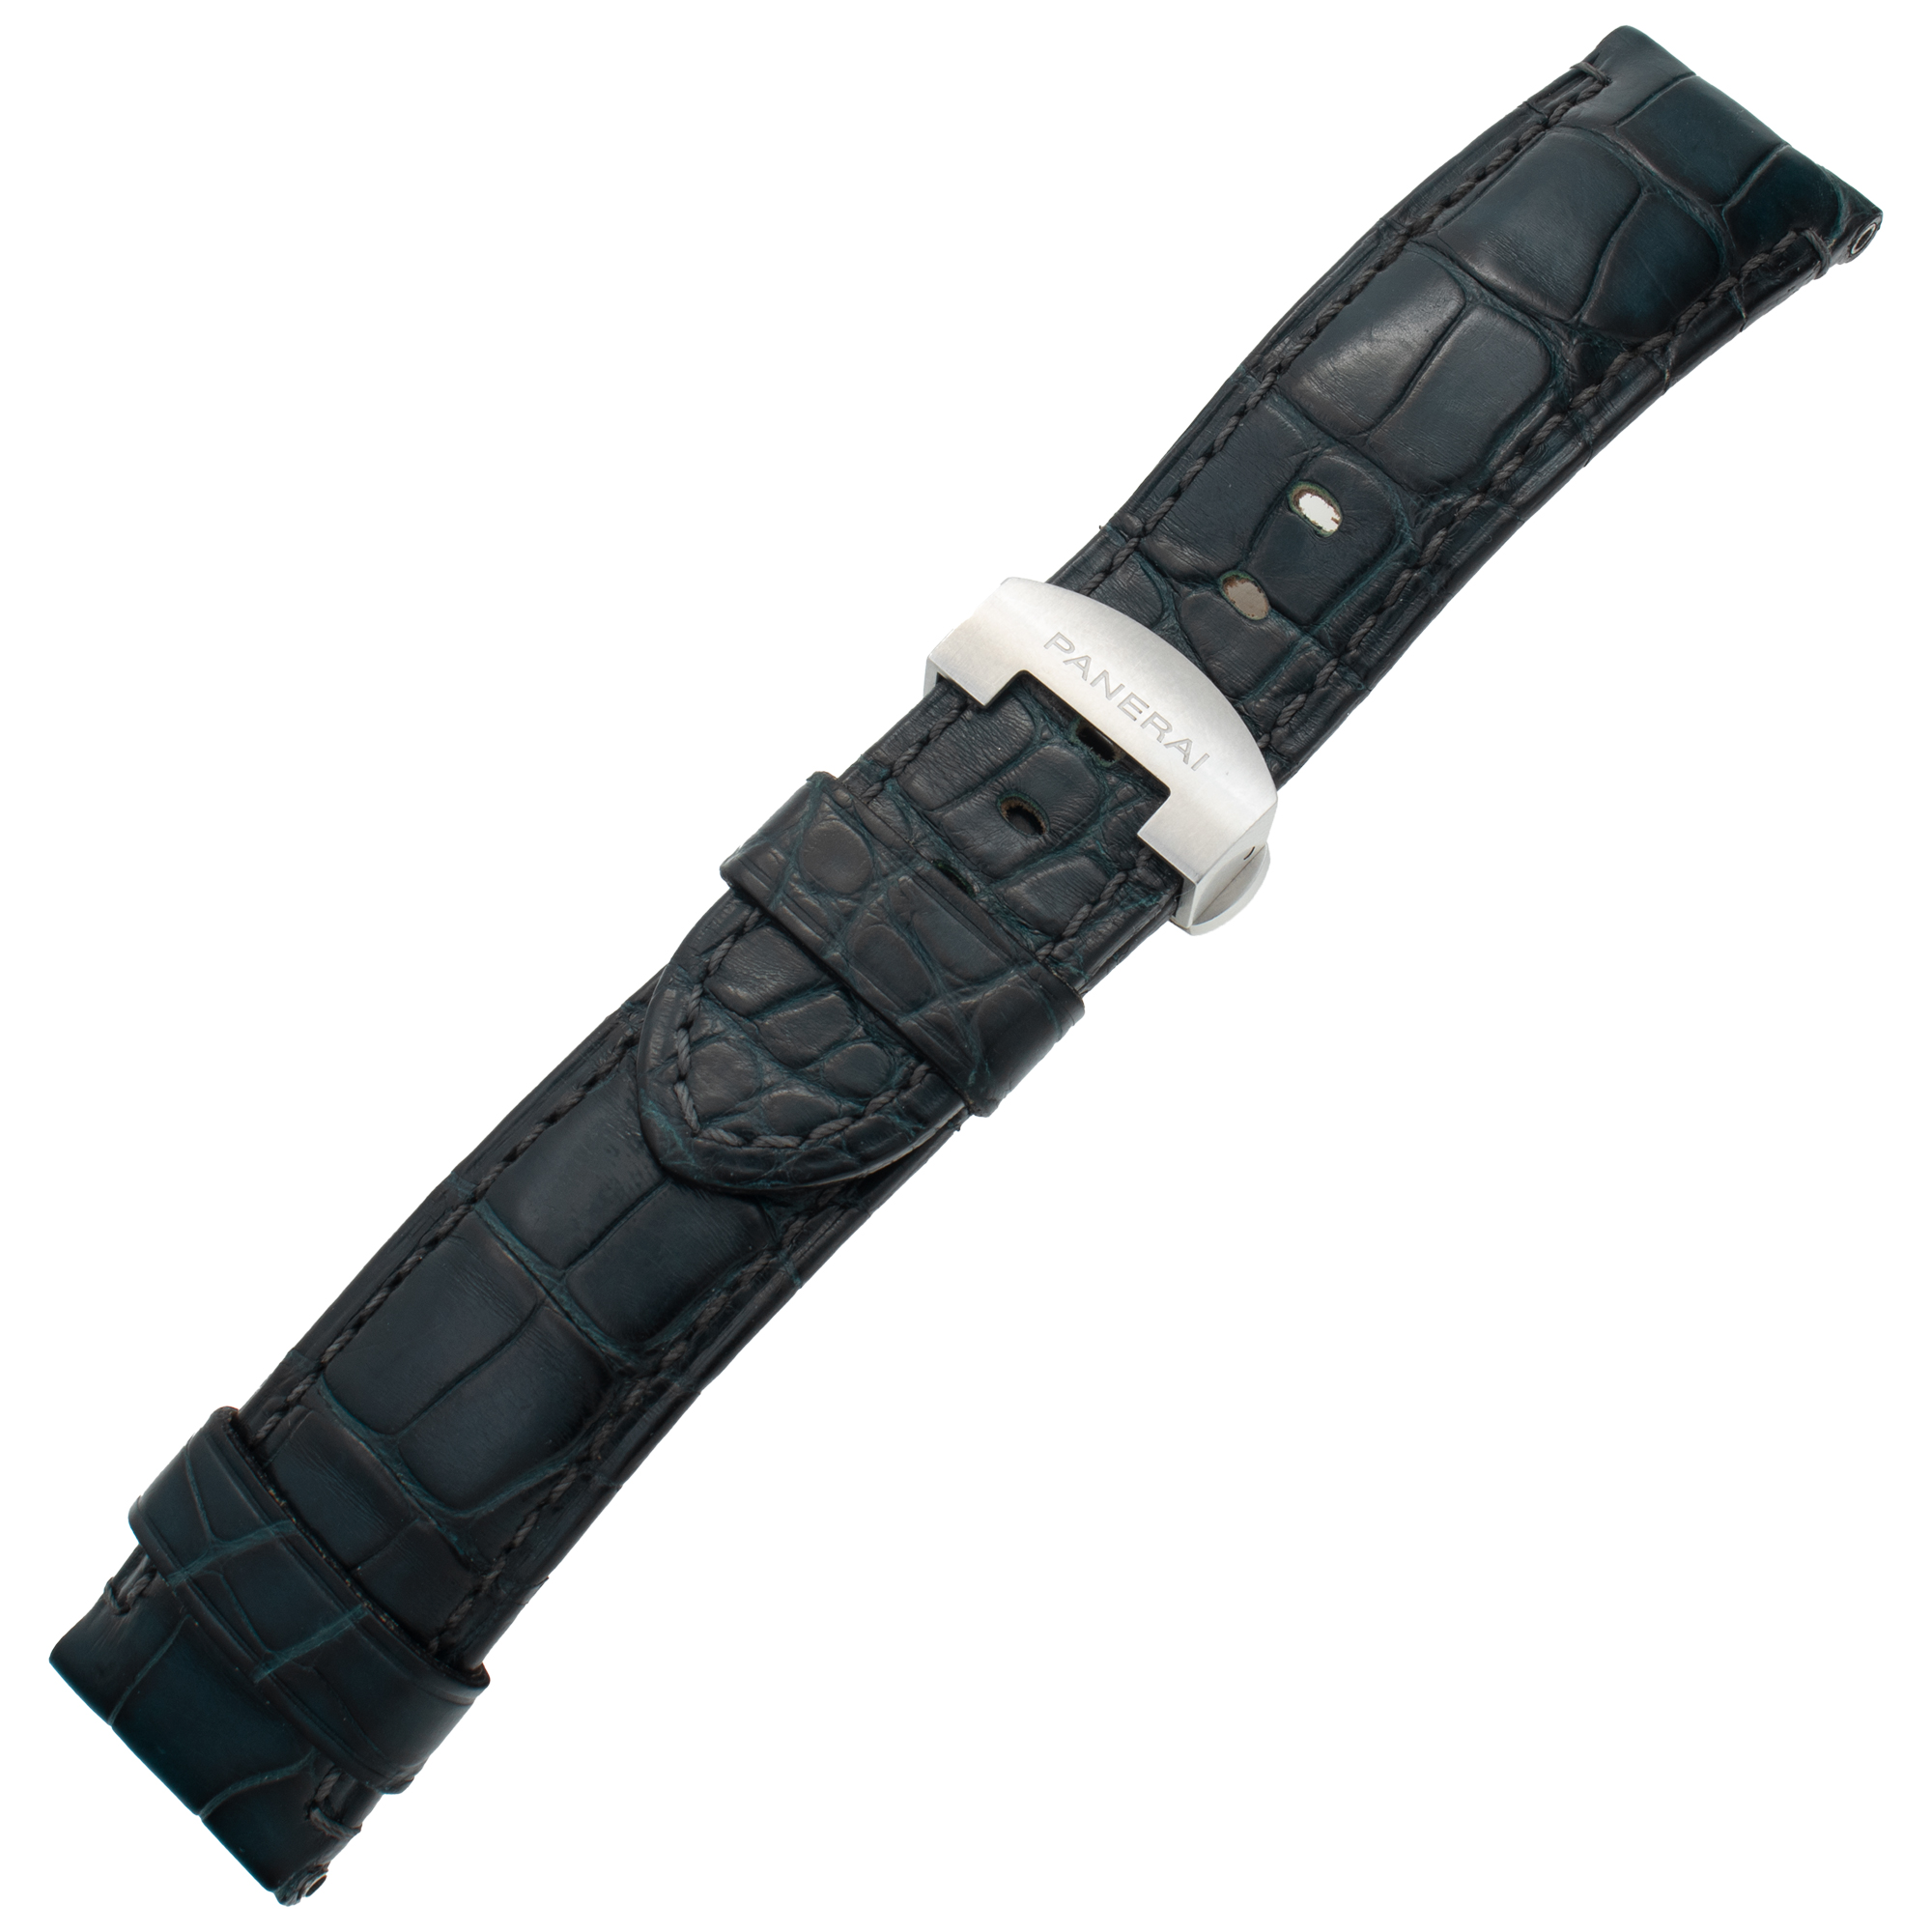 Gently worn Panerai black alligator strap with original Panerai deployant buckle (Default)